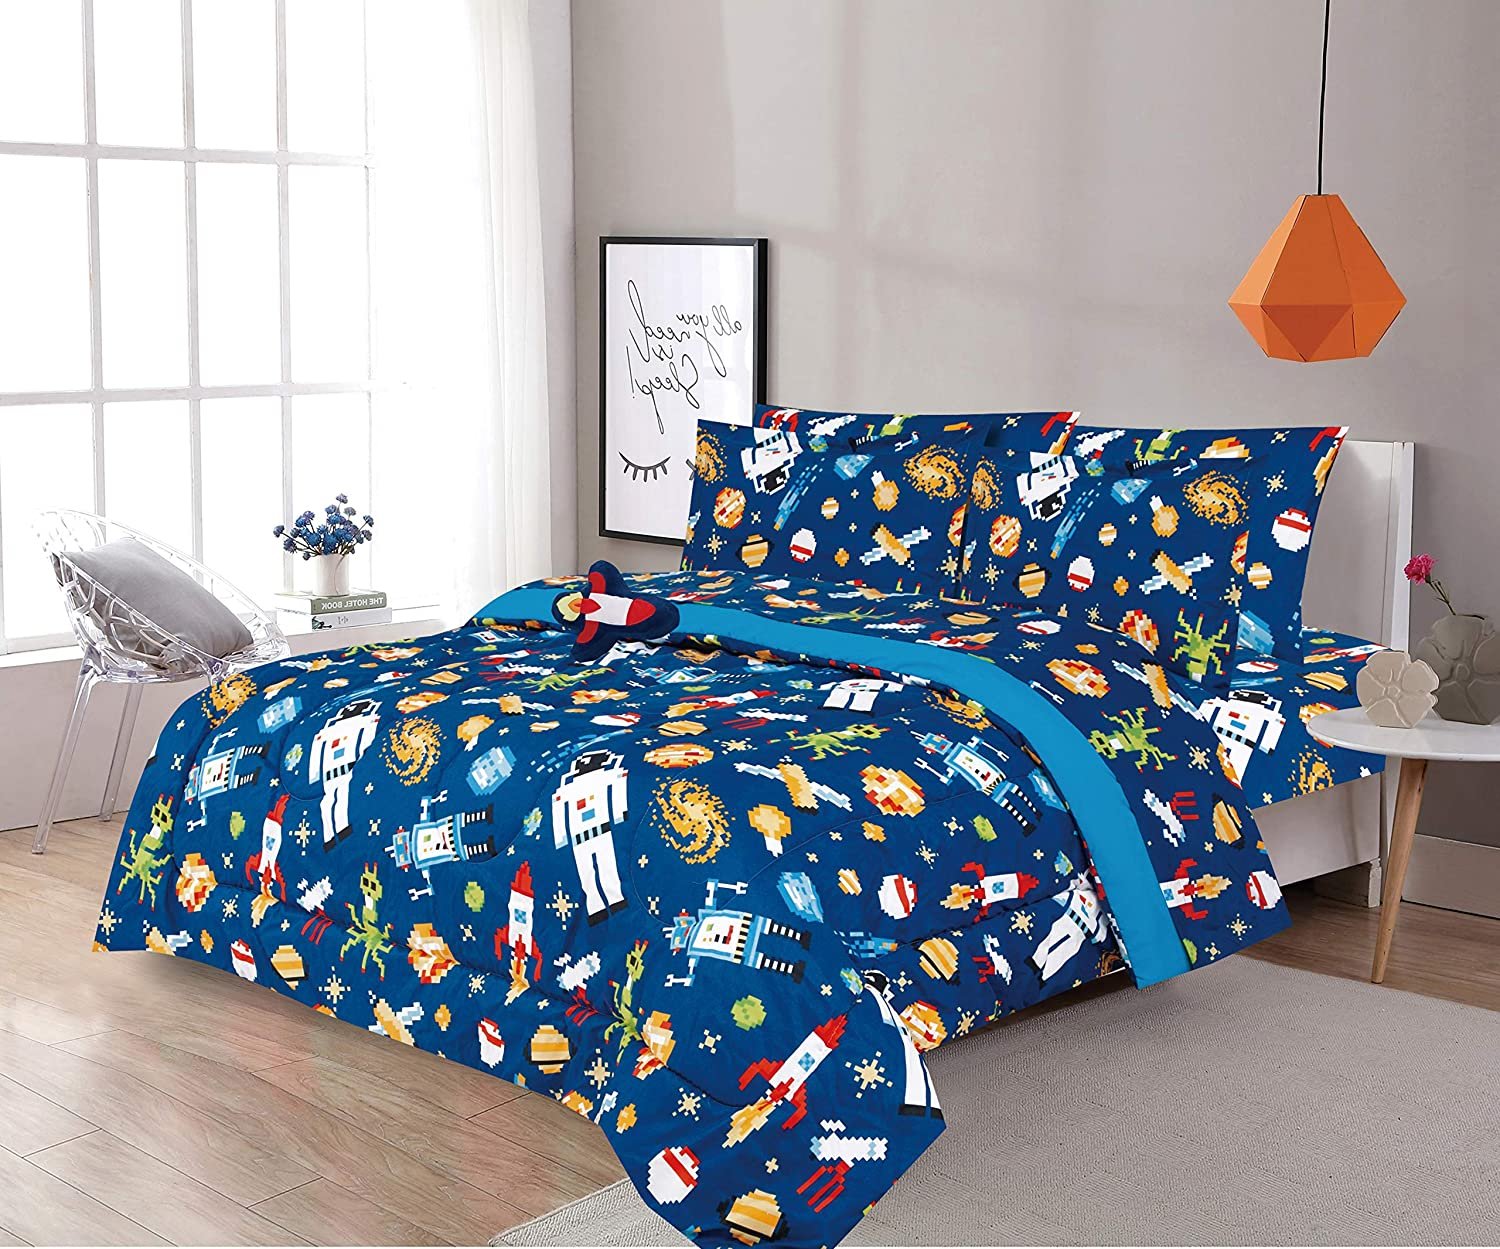 Sheet Set & Decorative Toy . Home Boys & Girls Comforter Set Bed in Bag w/Sham 